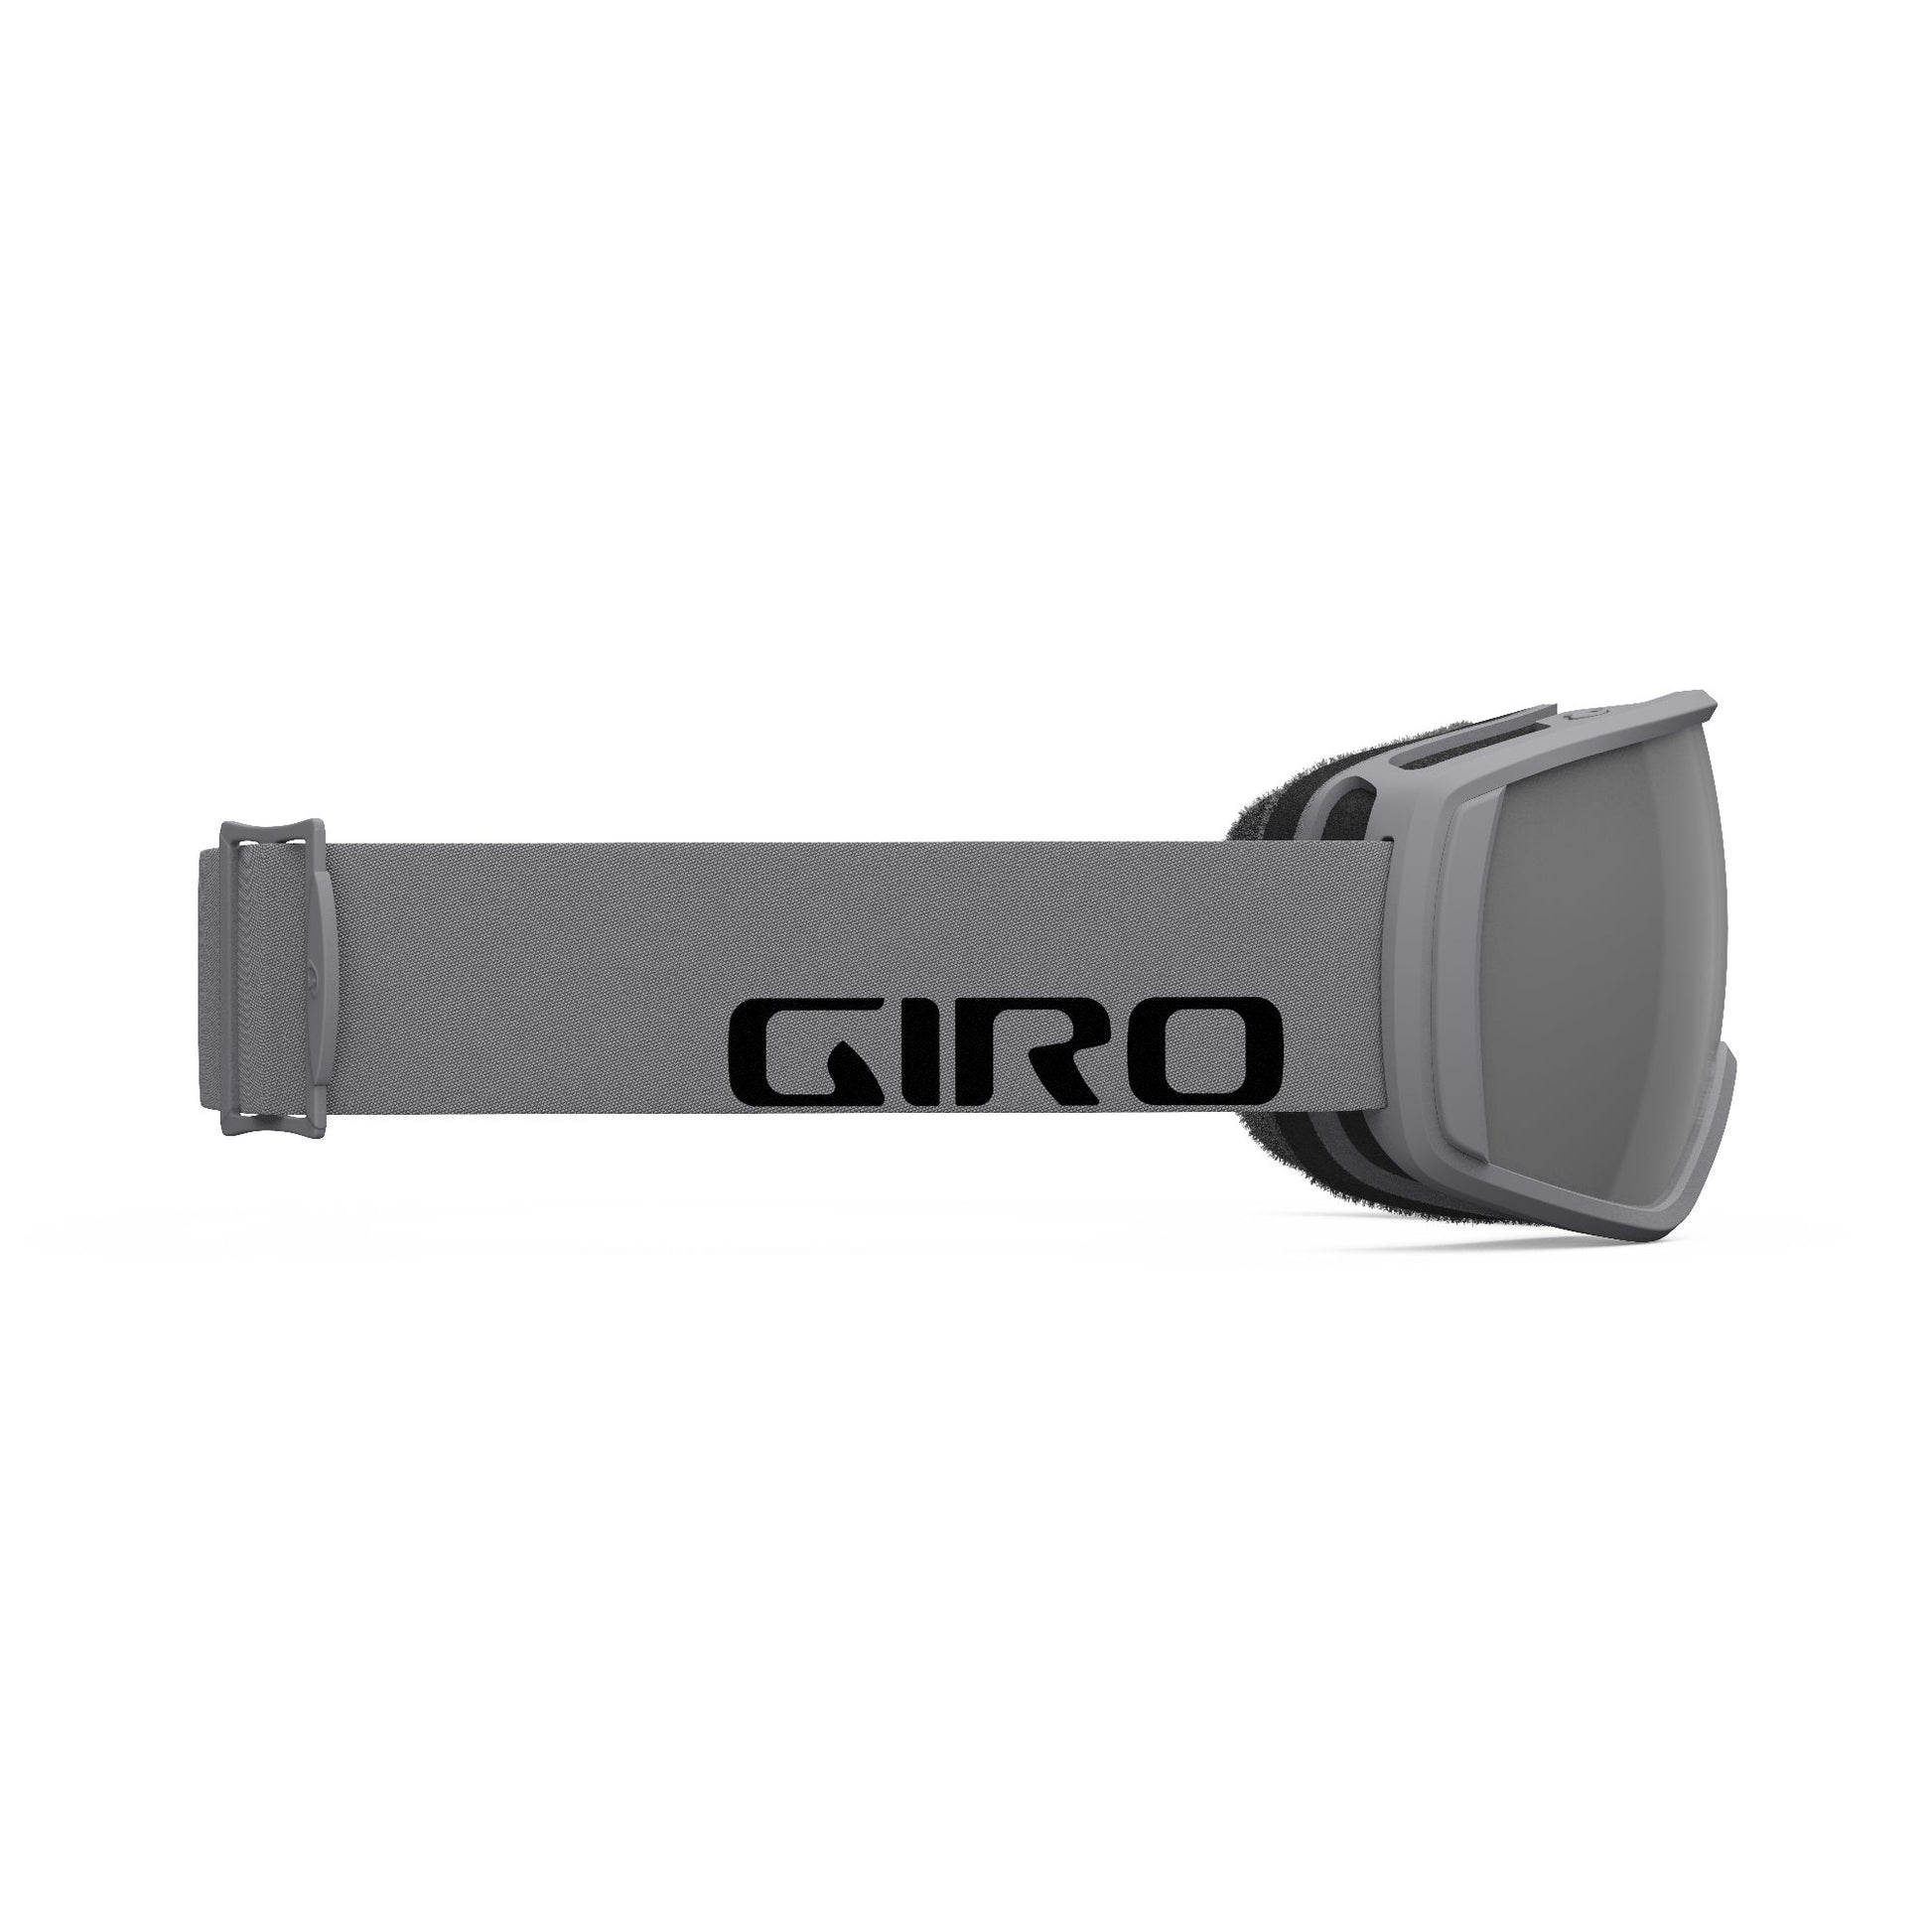 Giro Balance Goggle Grey Wordmark Vivid Onyx Snow Goggles